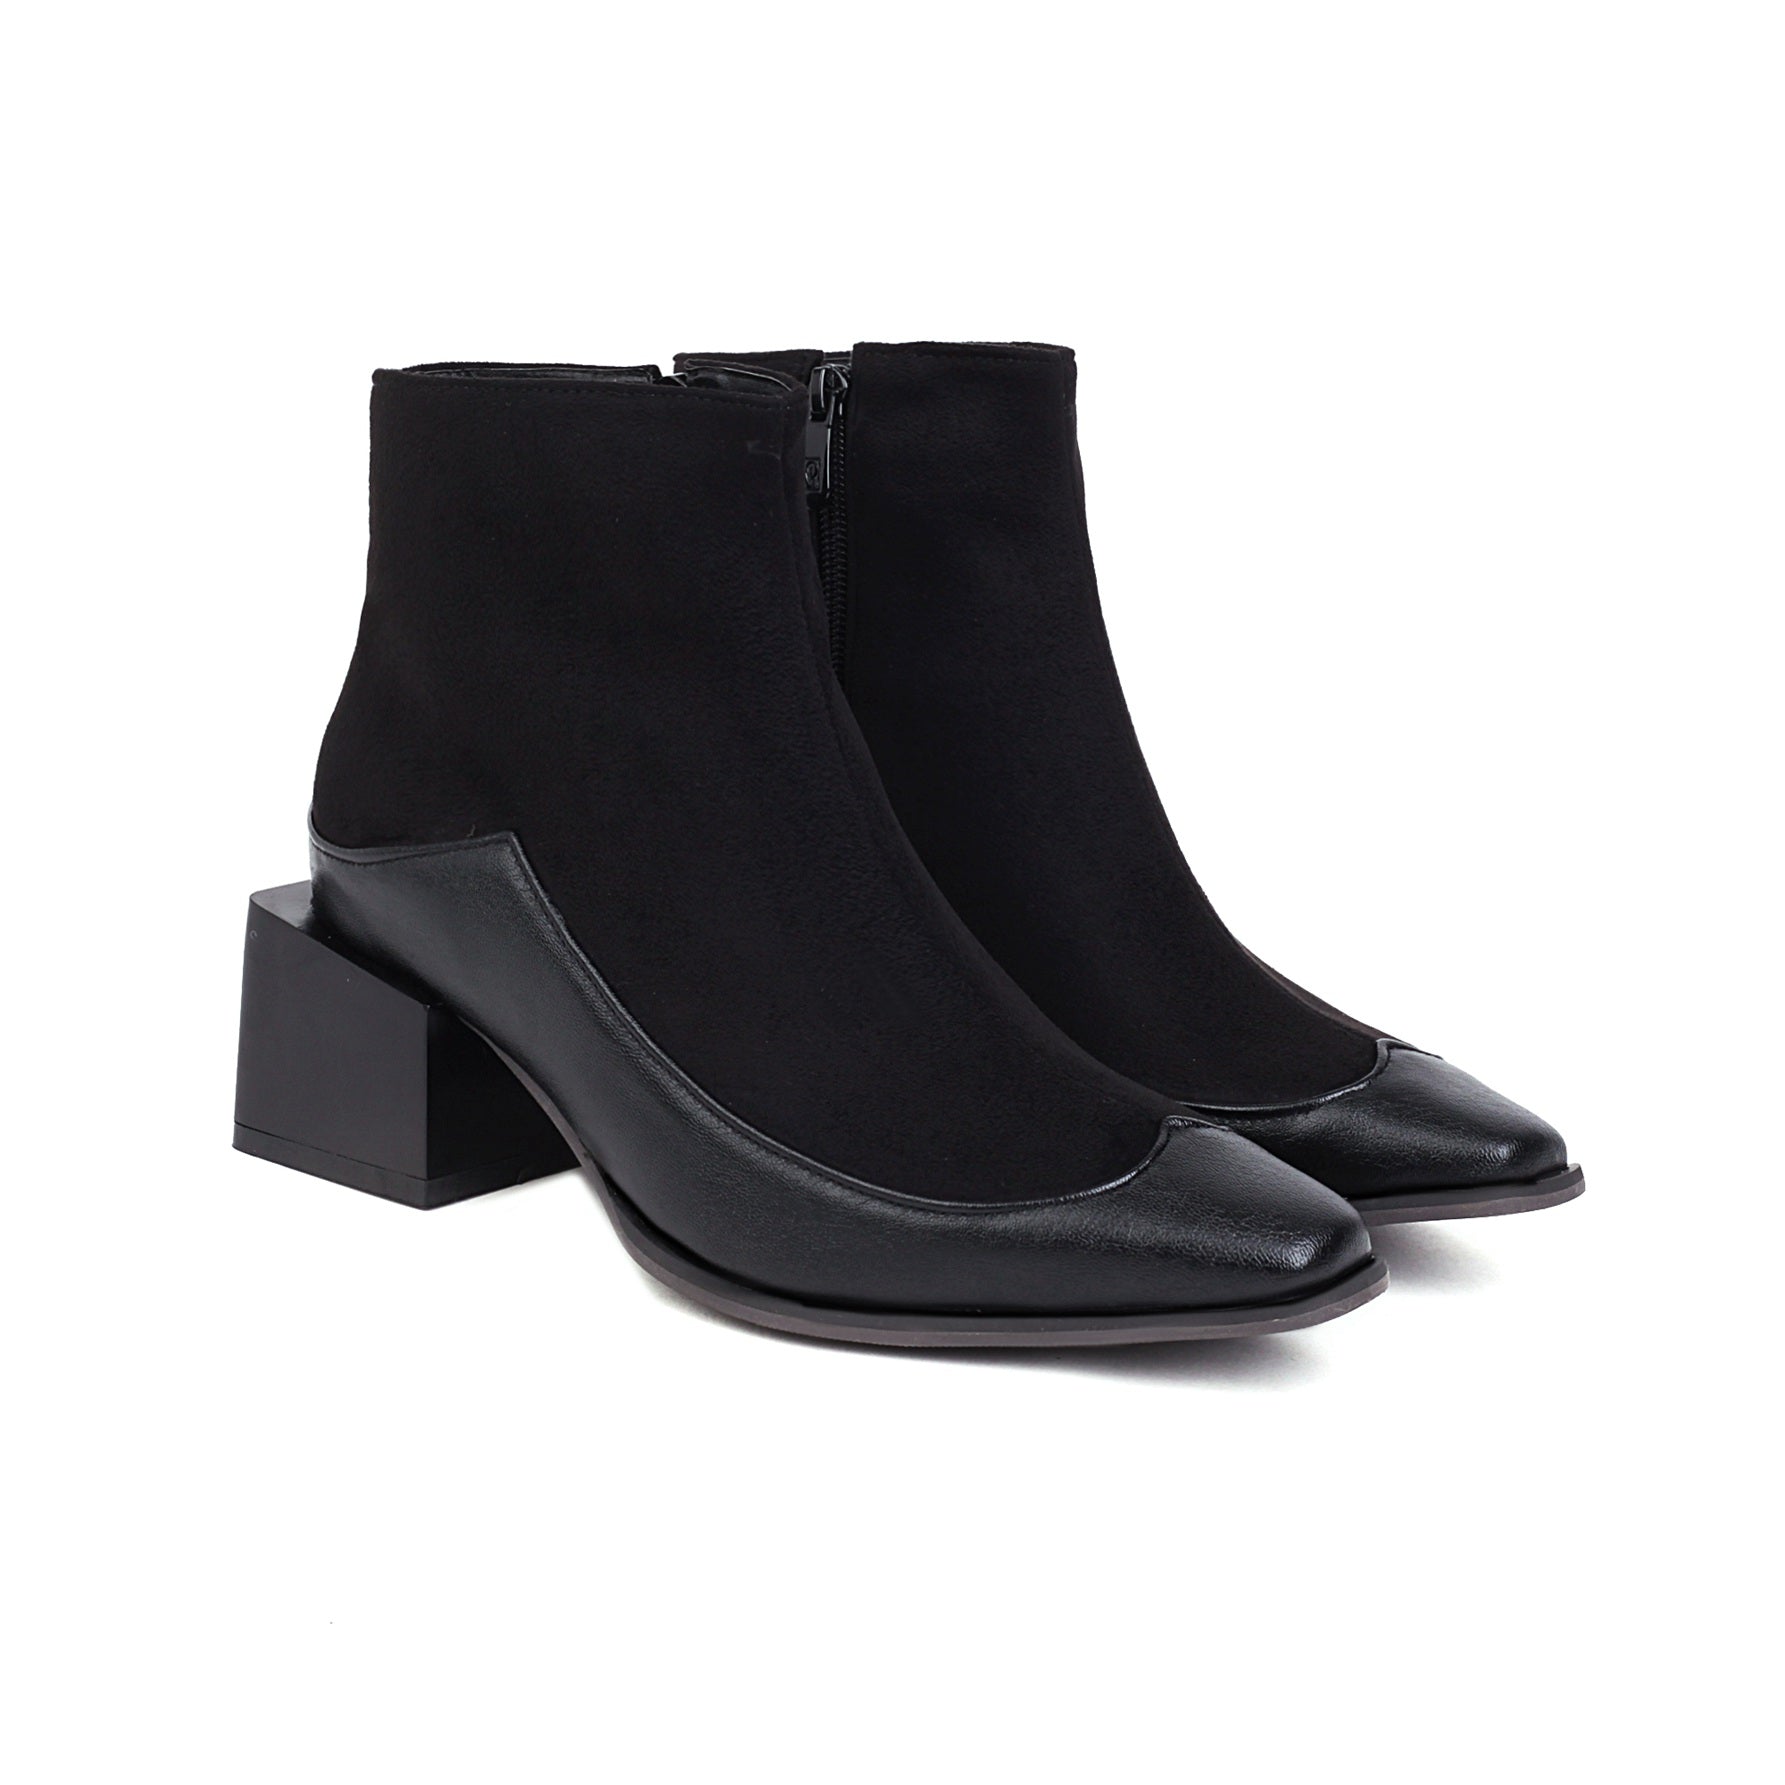 Bigsizeheels Stone pattern profiled heel ankle boots - Black freeshipping - bigsizeheel®-size5-size15 -All Plus Sizes Available!